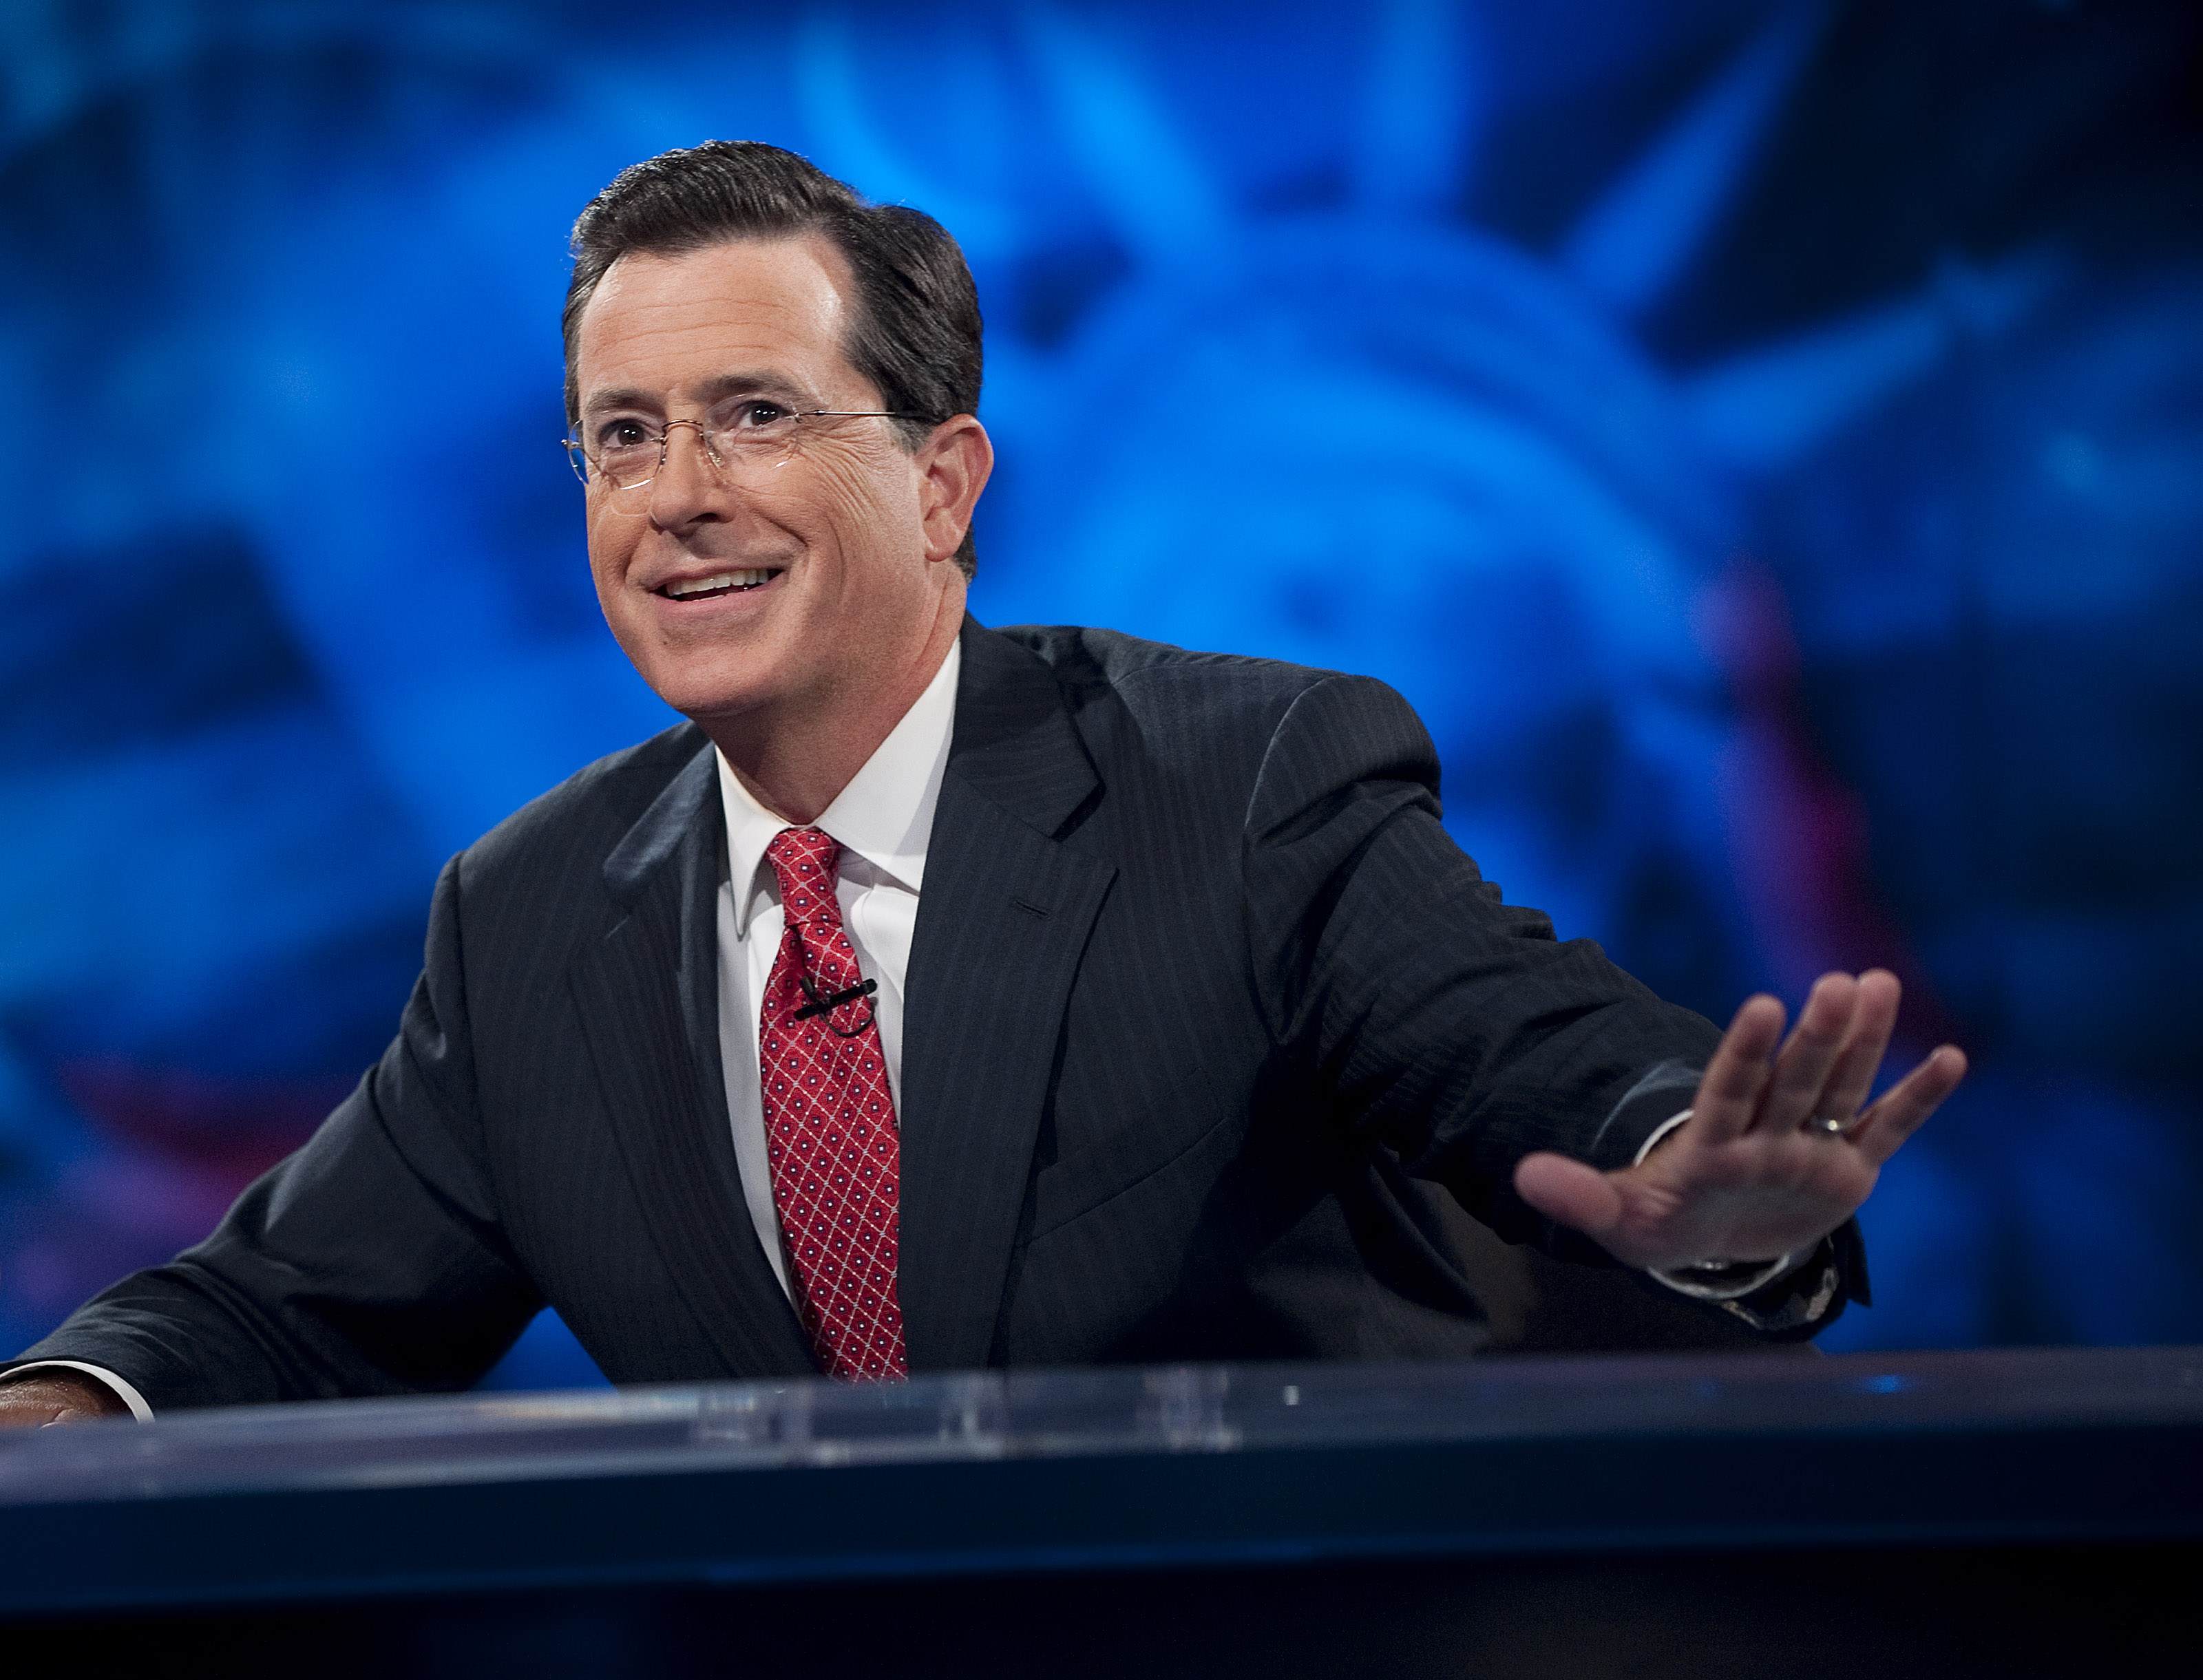 The Colbert Report HD wallpapers, Desktop wallpaper - most viewed